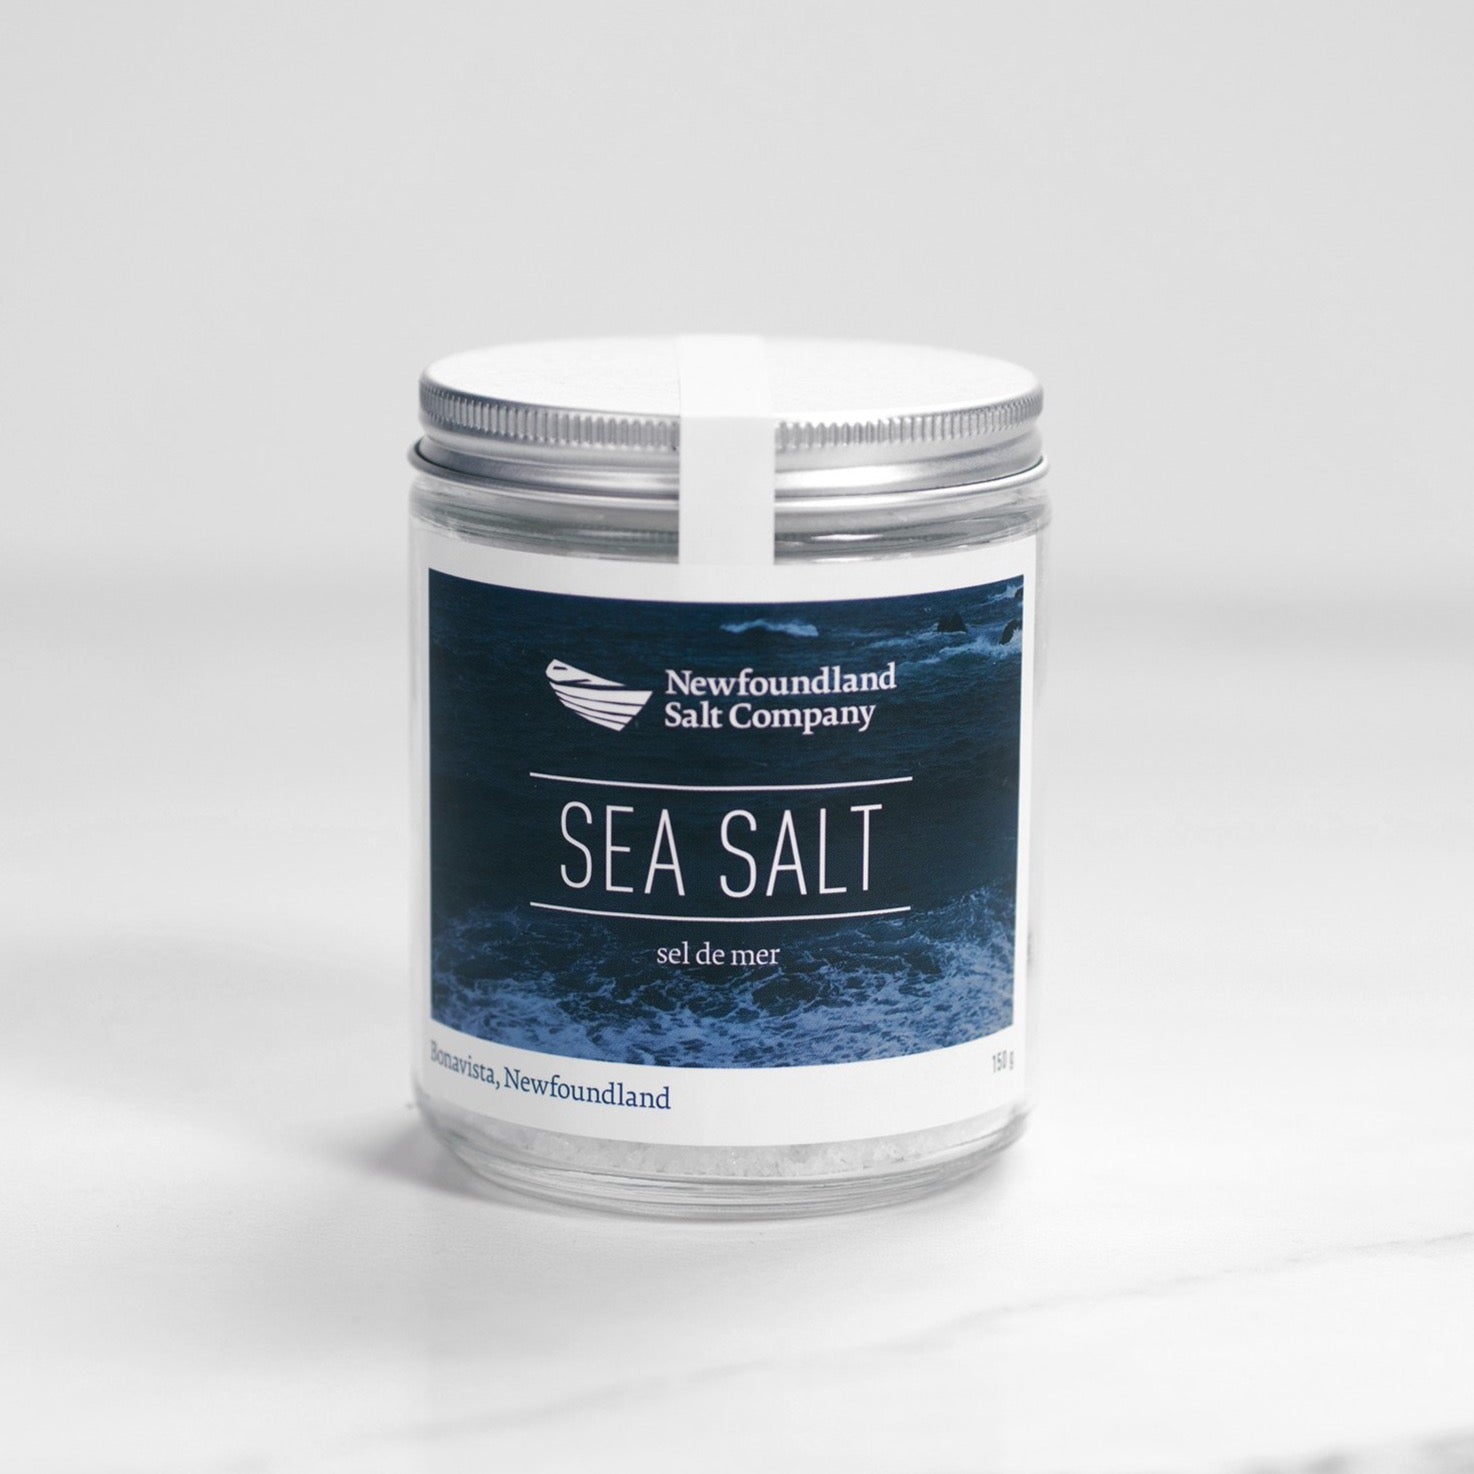 Newfoundland Sea Salt